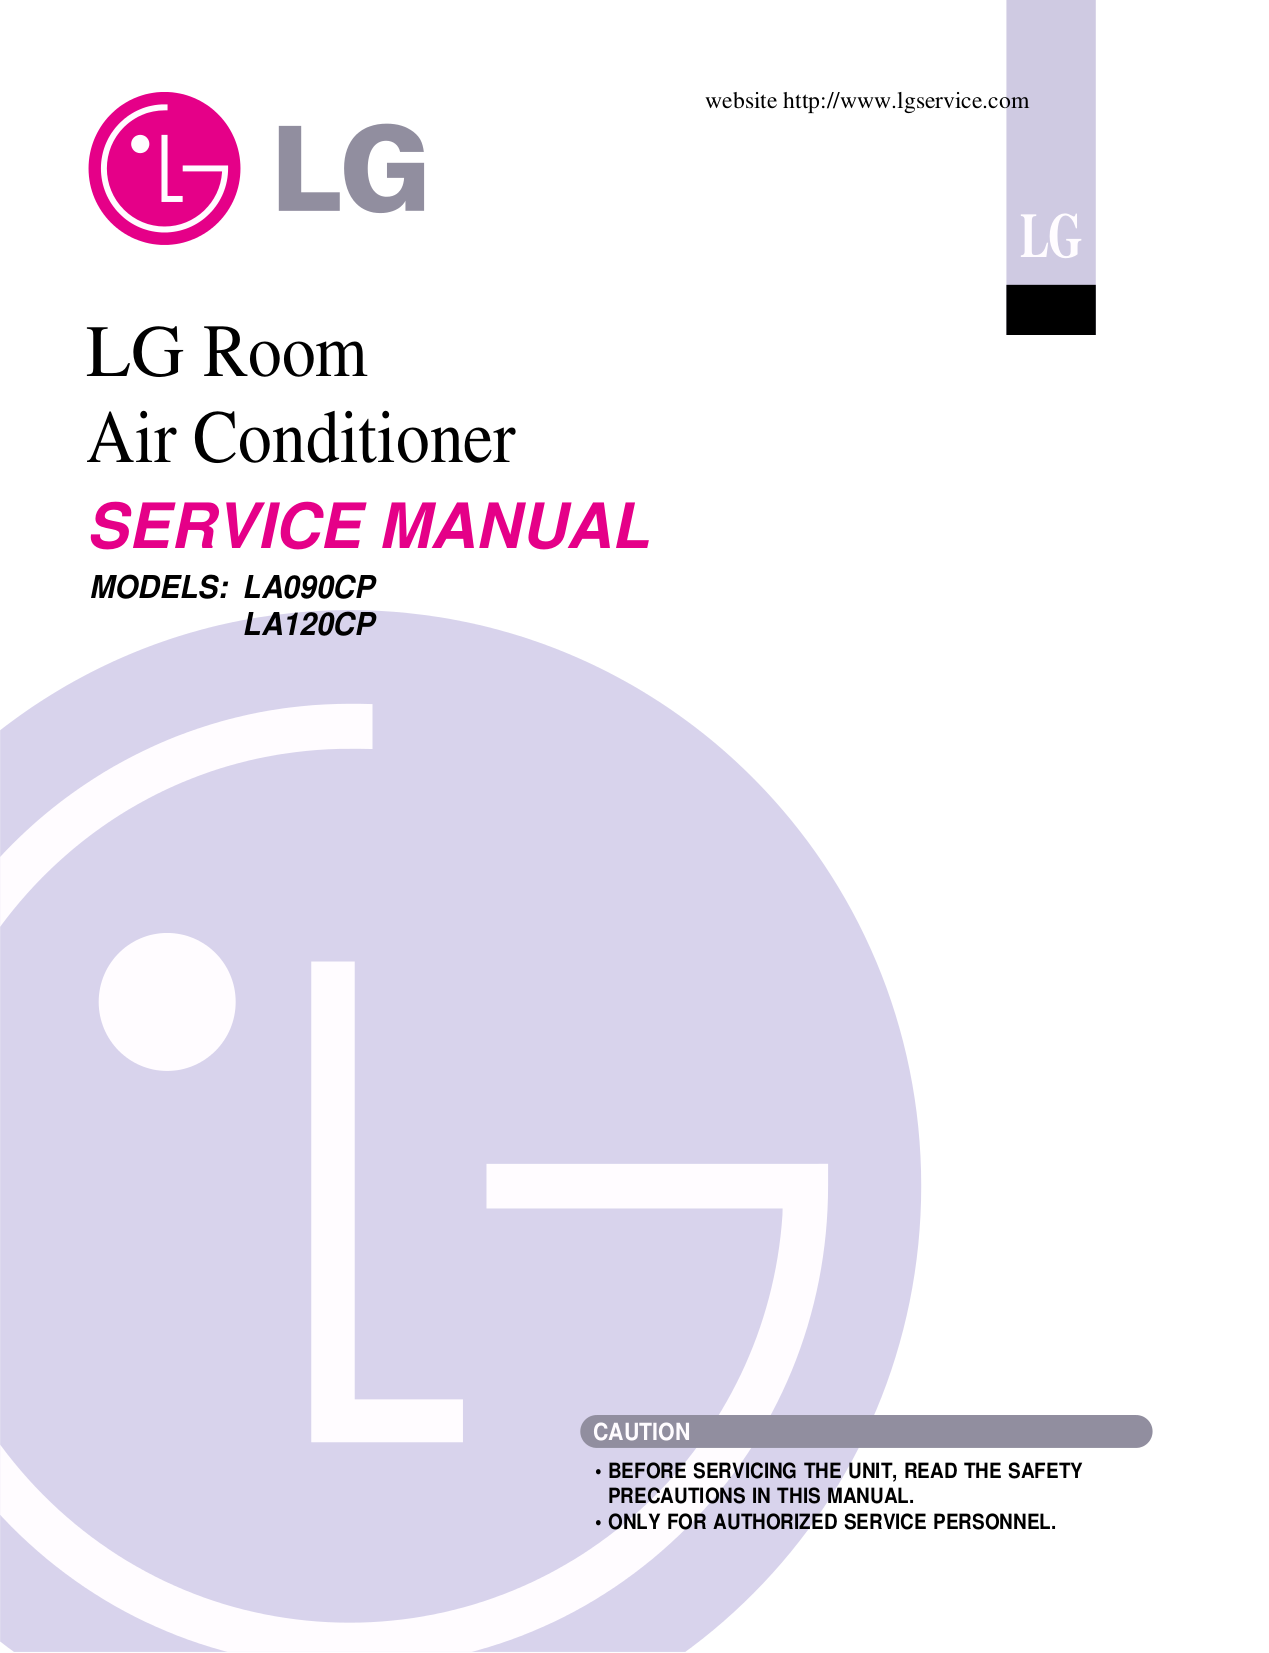 Pdf Manual For Lg Air Conditioner Art Cool La120cp